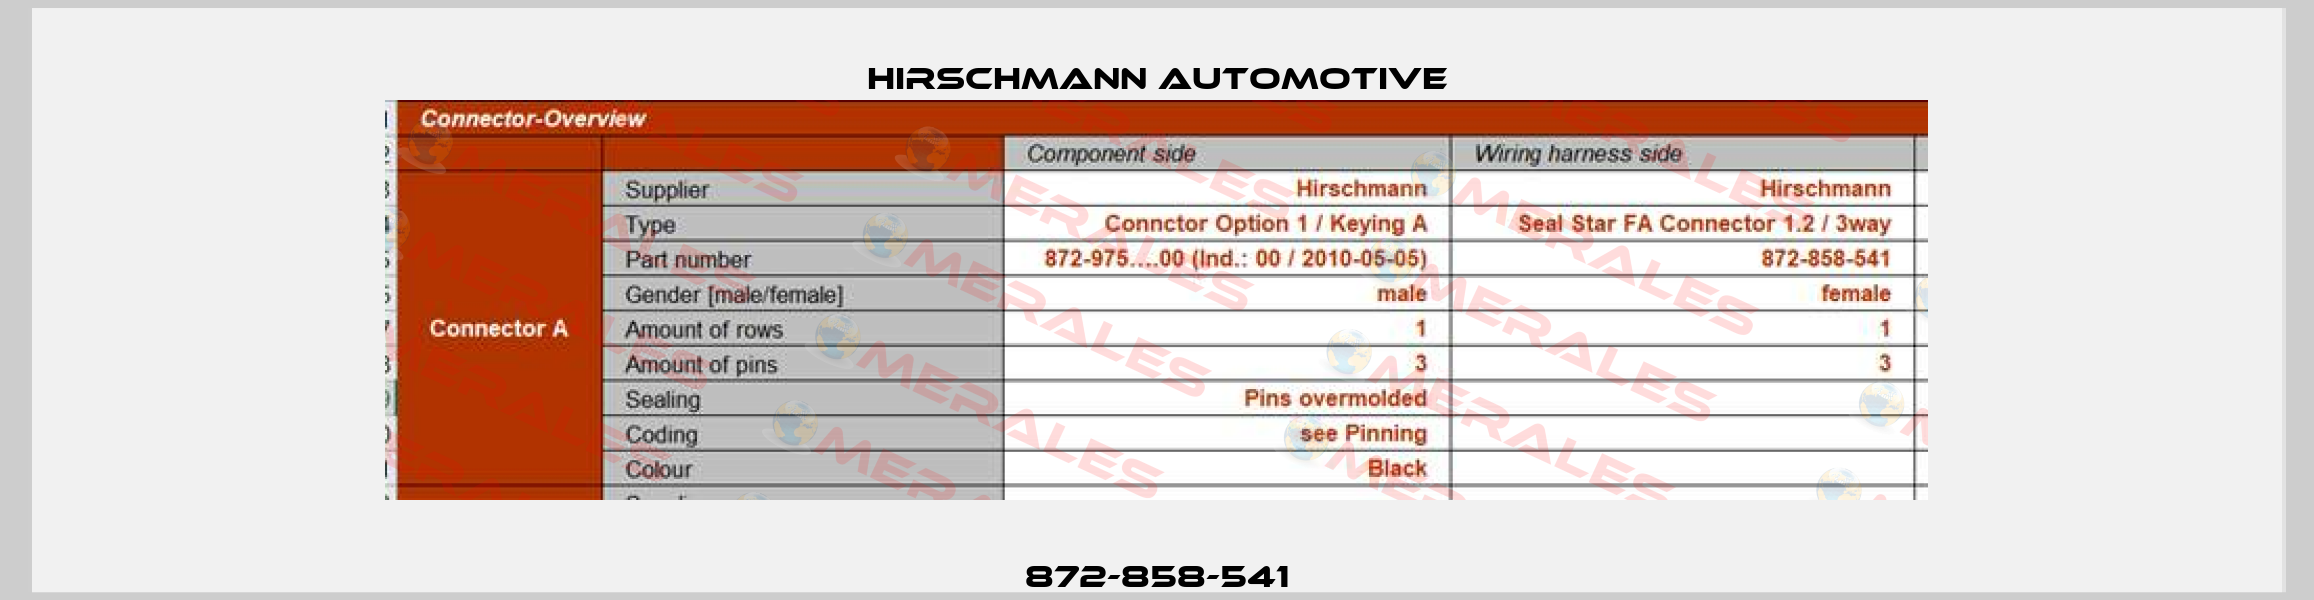 872-858-541 Hirschmann Automotive